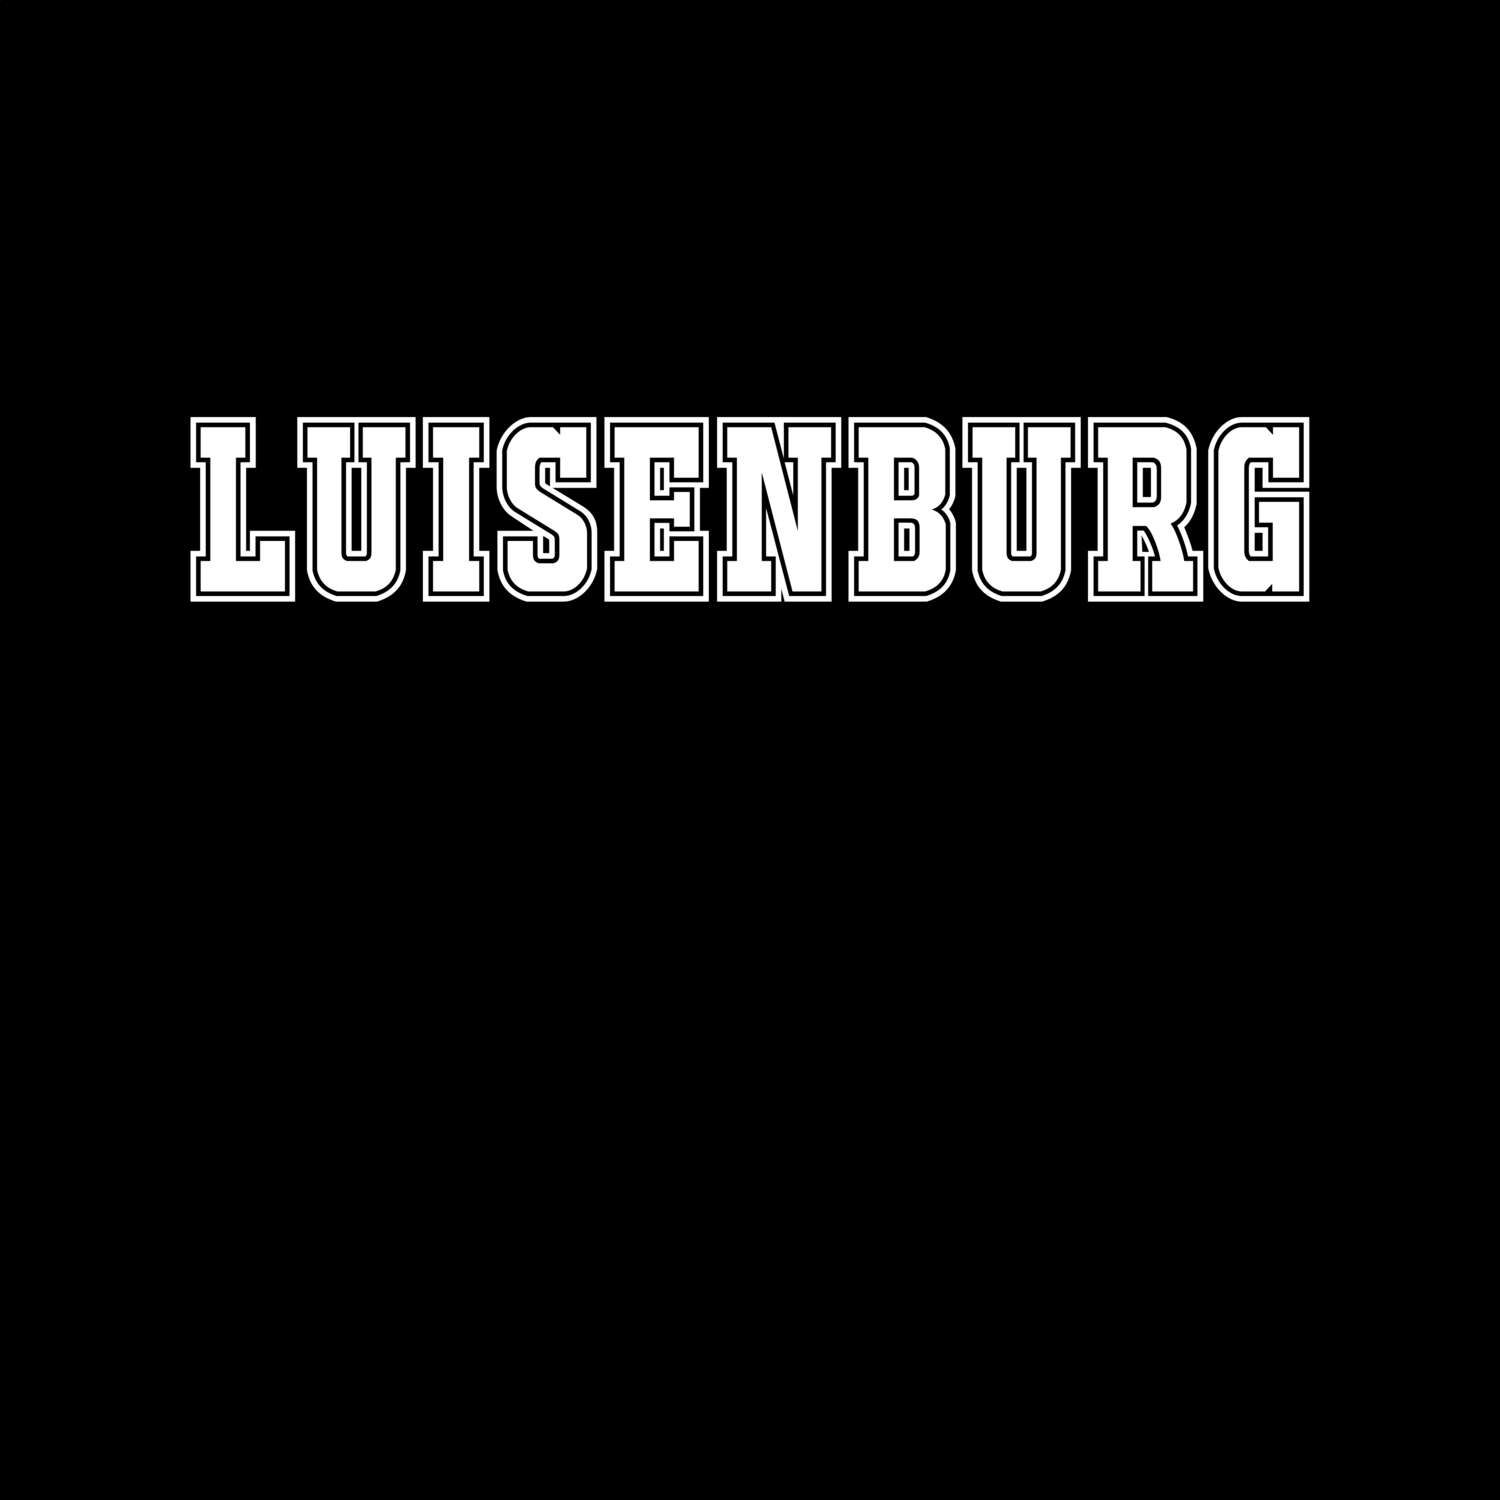 Luisenburg T-Shirt »Classic«